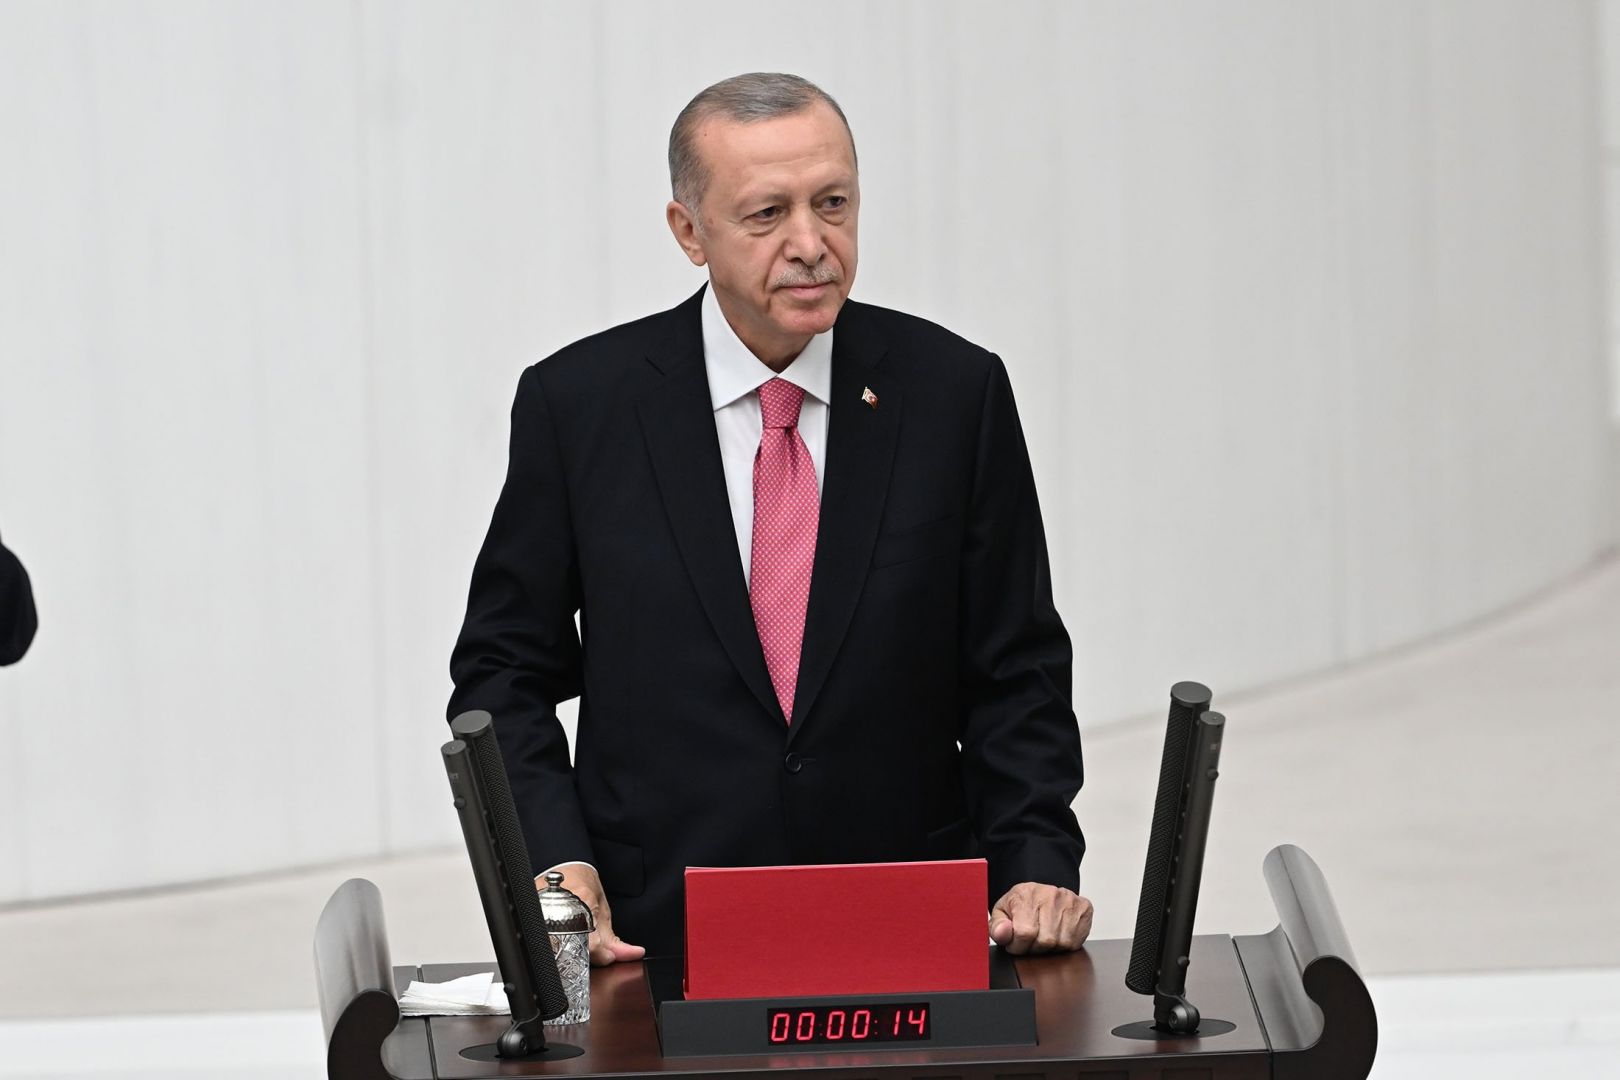 Recep Tayyip Erdogan swears in as 12th president at parliament